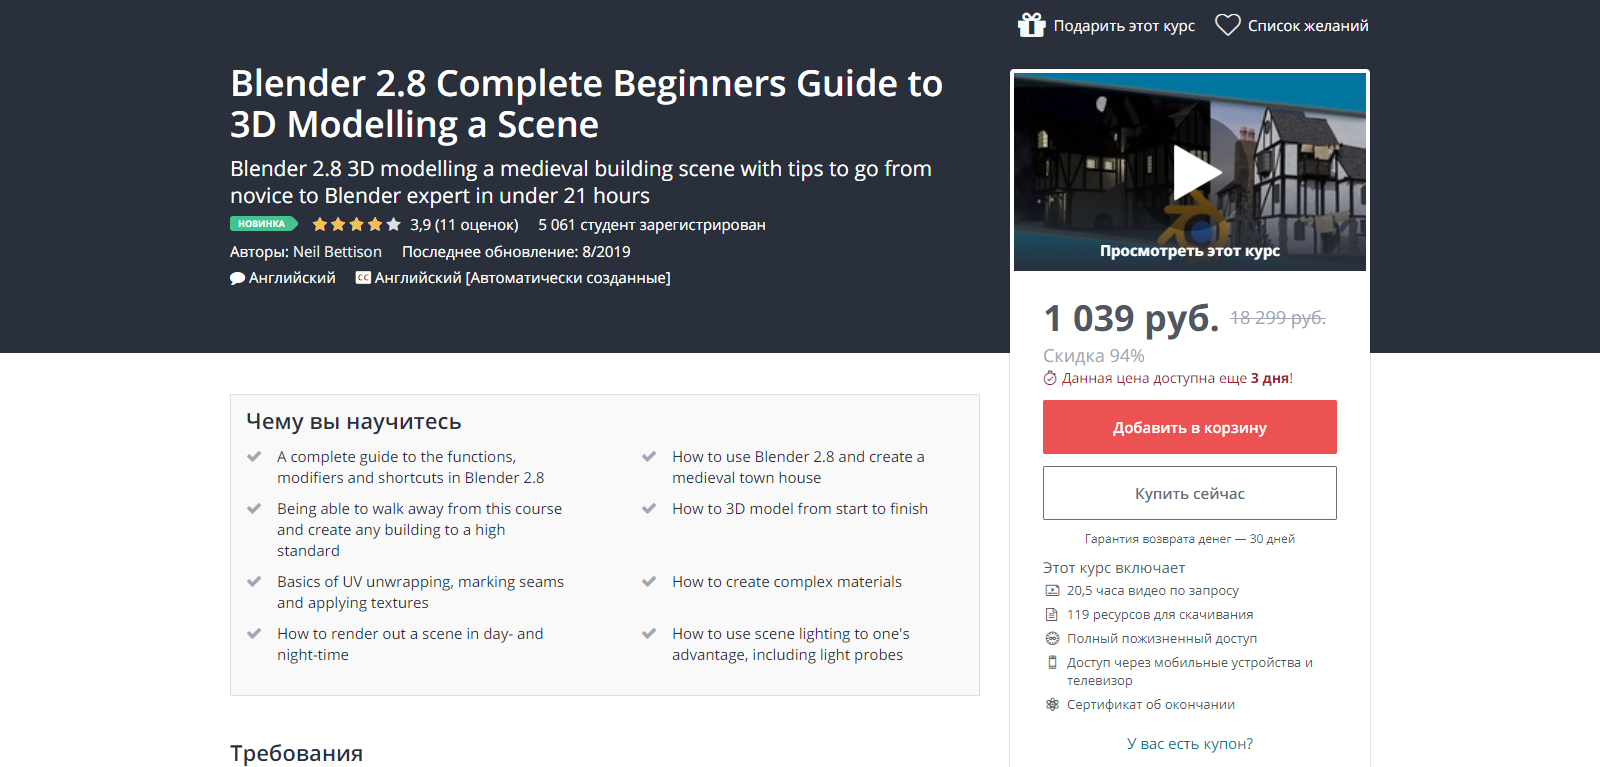 FireShot Capture 013 - Blender 2.8 Complete Beginners Guide to 3D Modelling a Scene - Udemy_ -...png